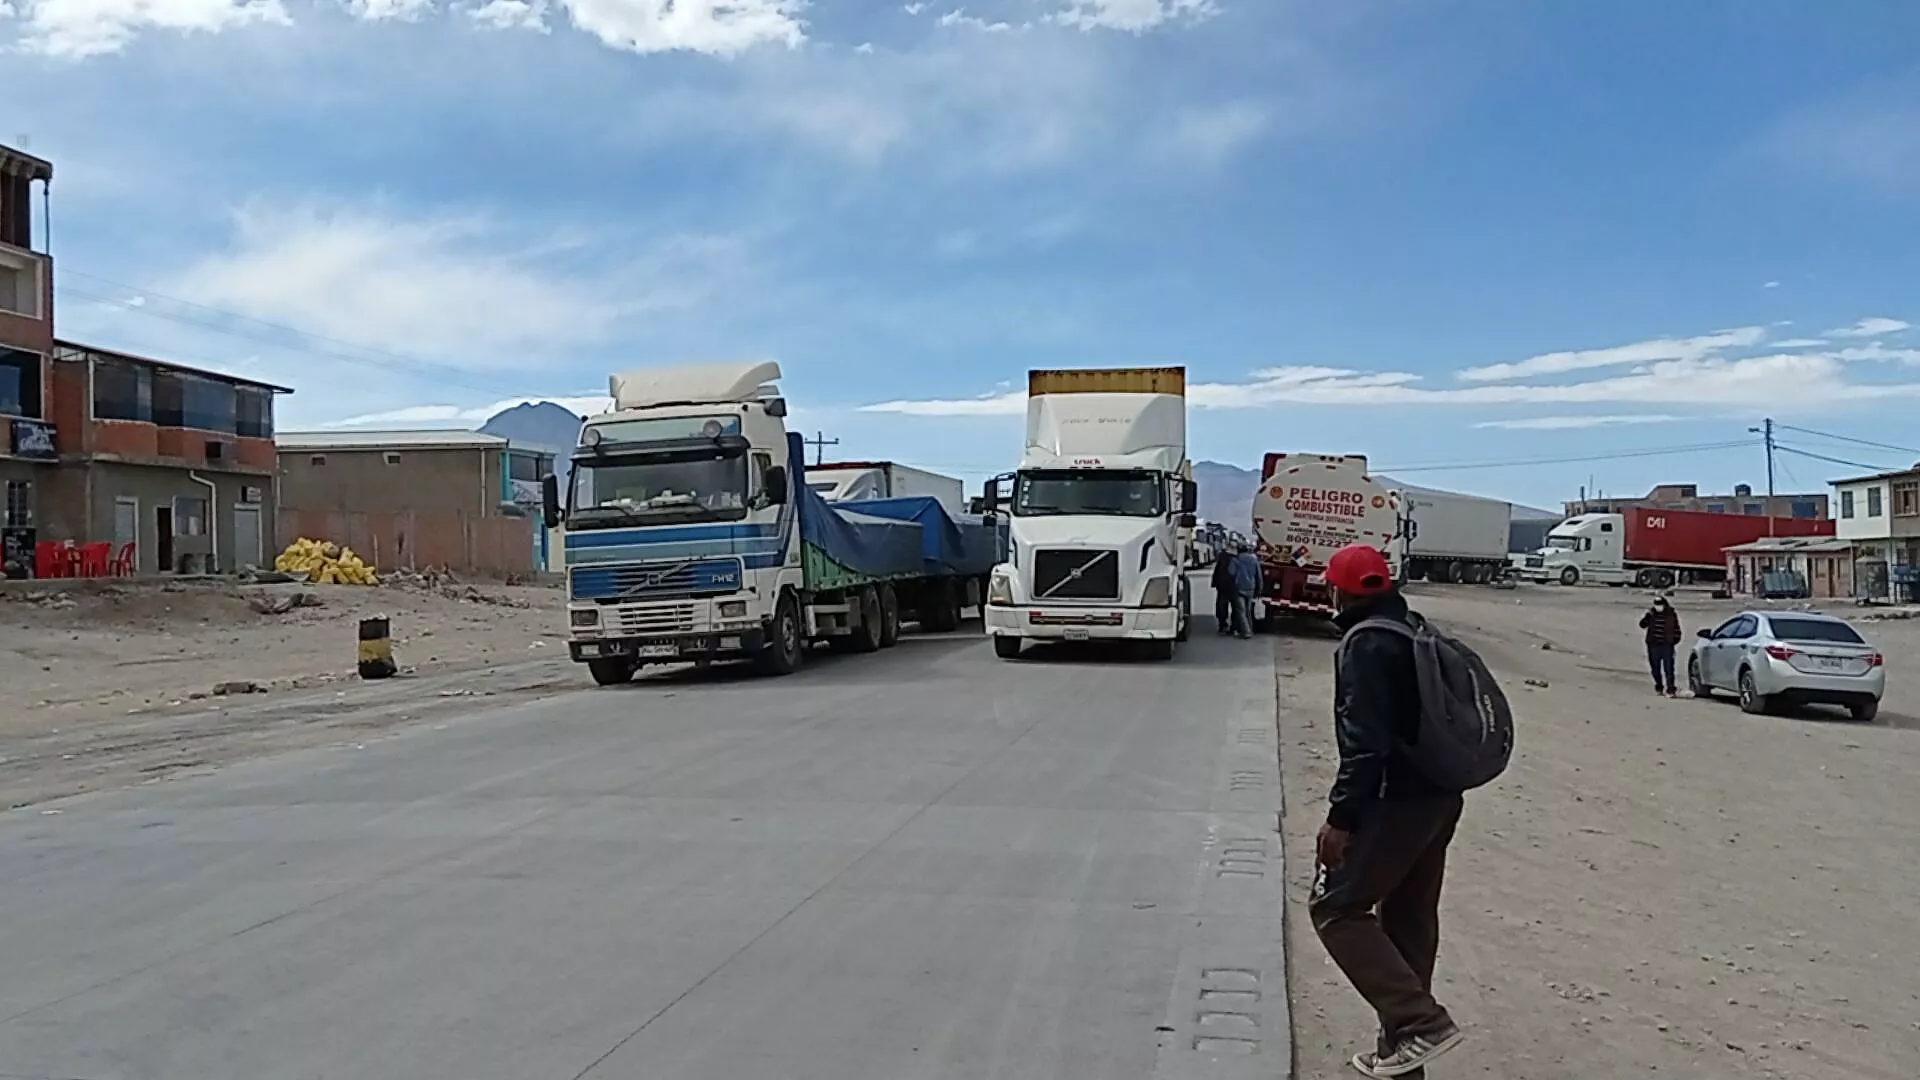  Chile reabre frontera altiplánica con Bolivia tras cierre de emergencia por COVID-19